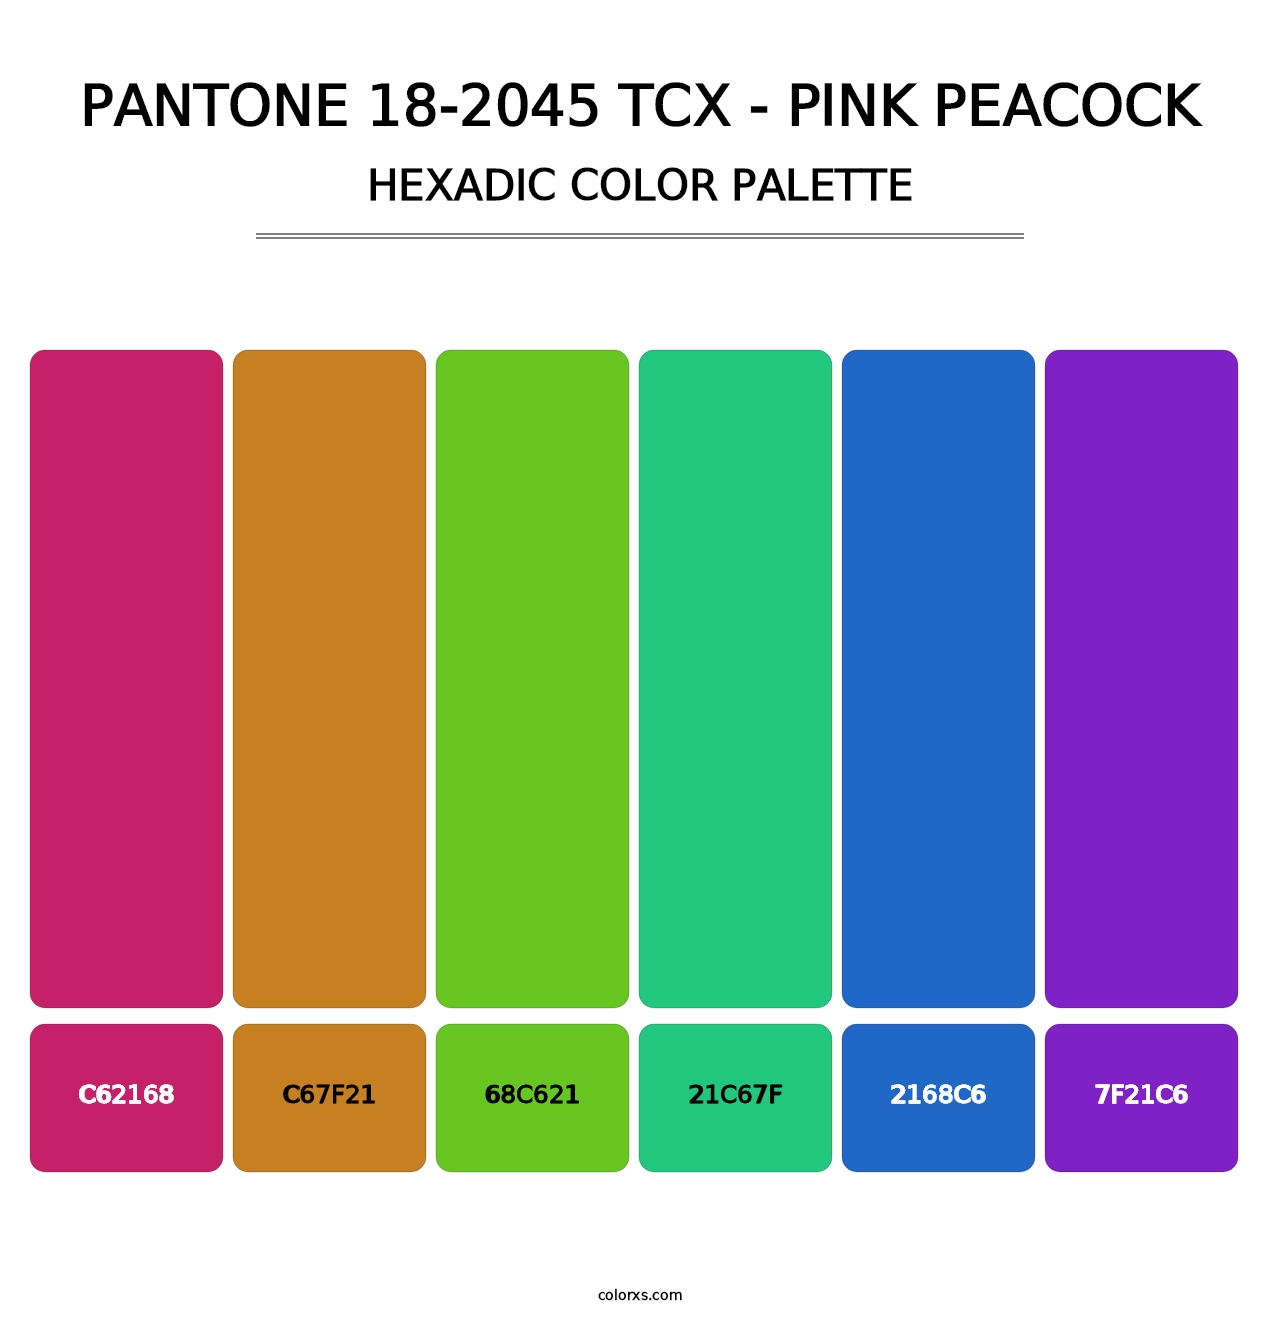 PANTONE 18-2045 TCX - Pink Peacock - Hexadic Color Palette